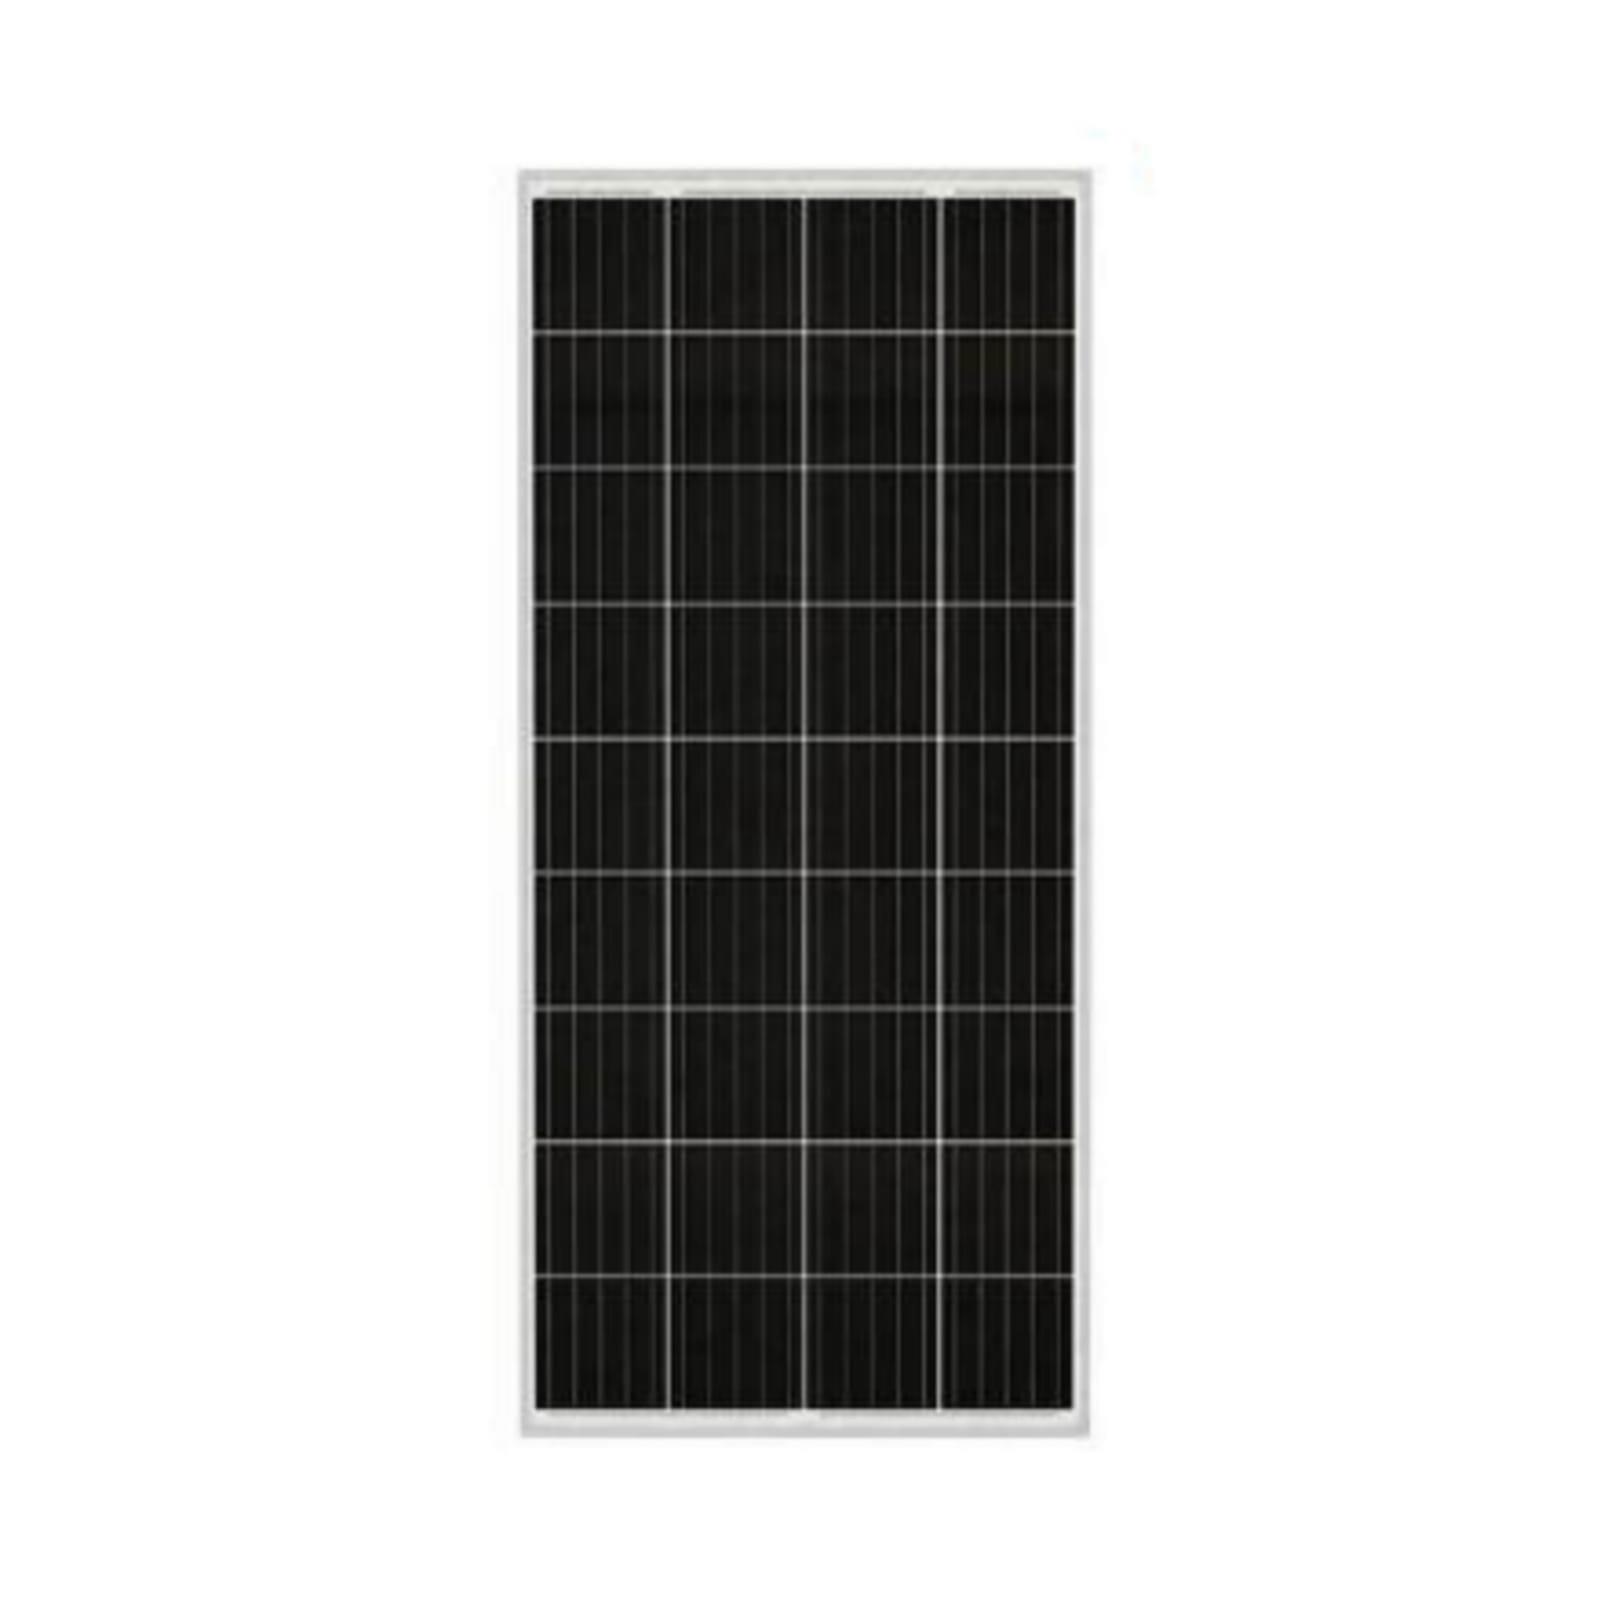 Lexron 200 W W Monokrıstal Güneş Paneli Solar Panel A